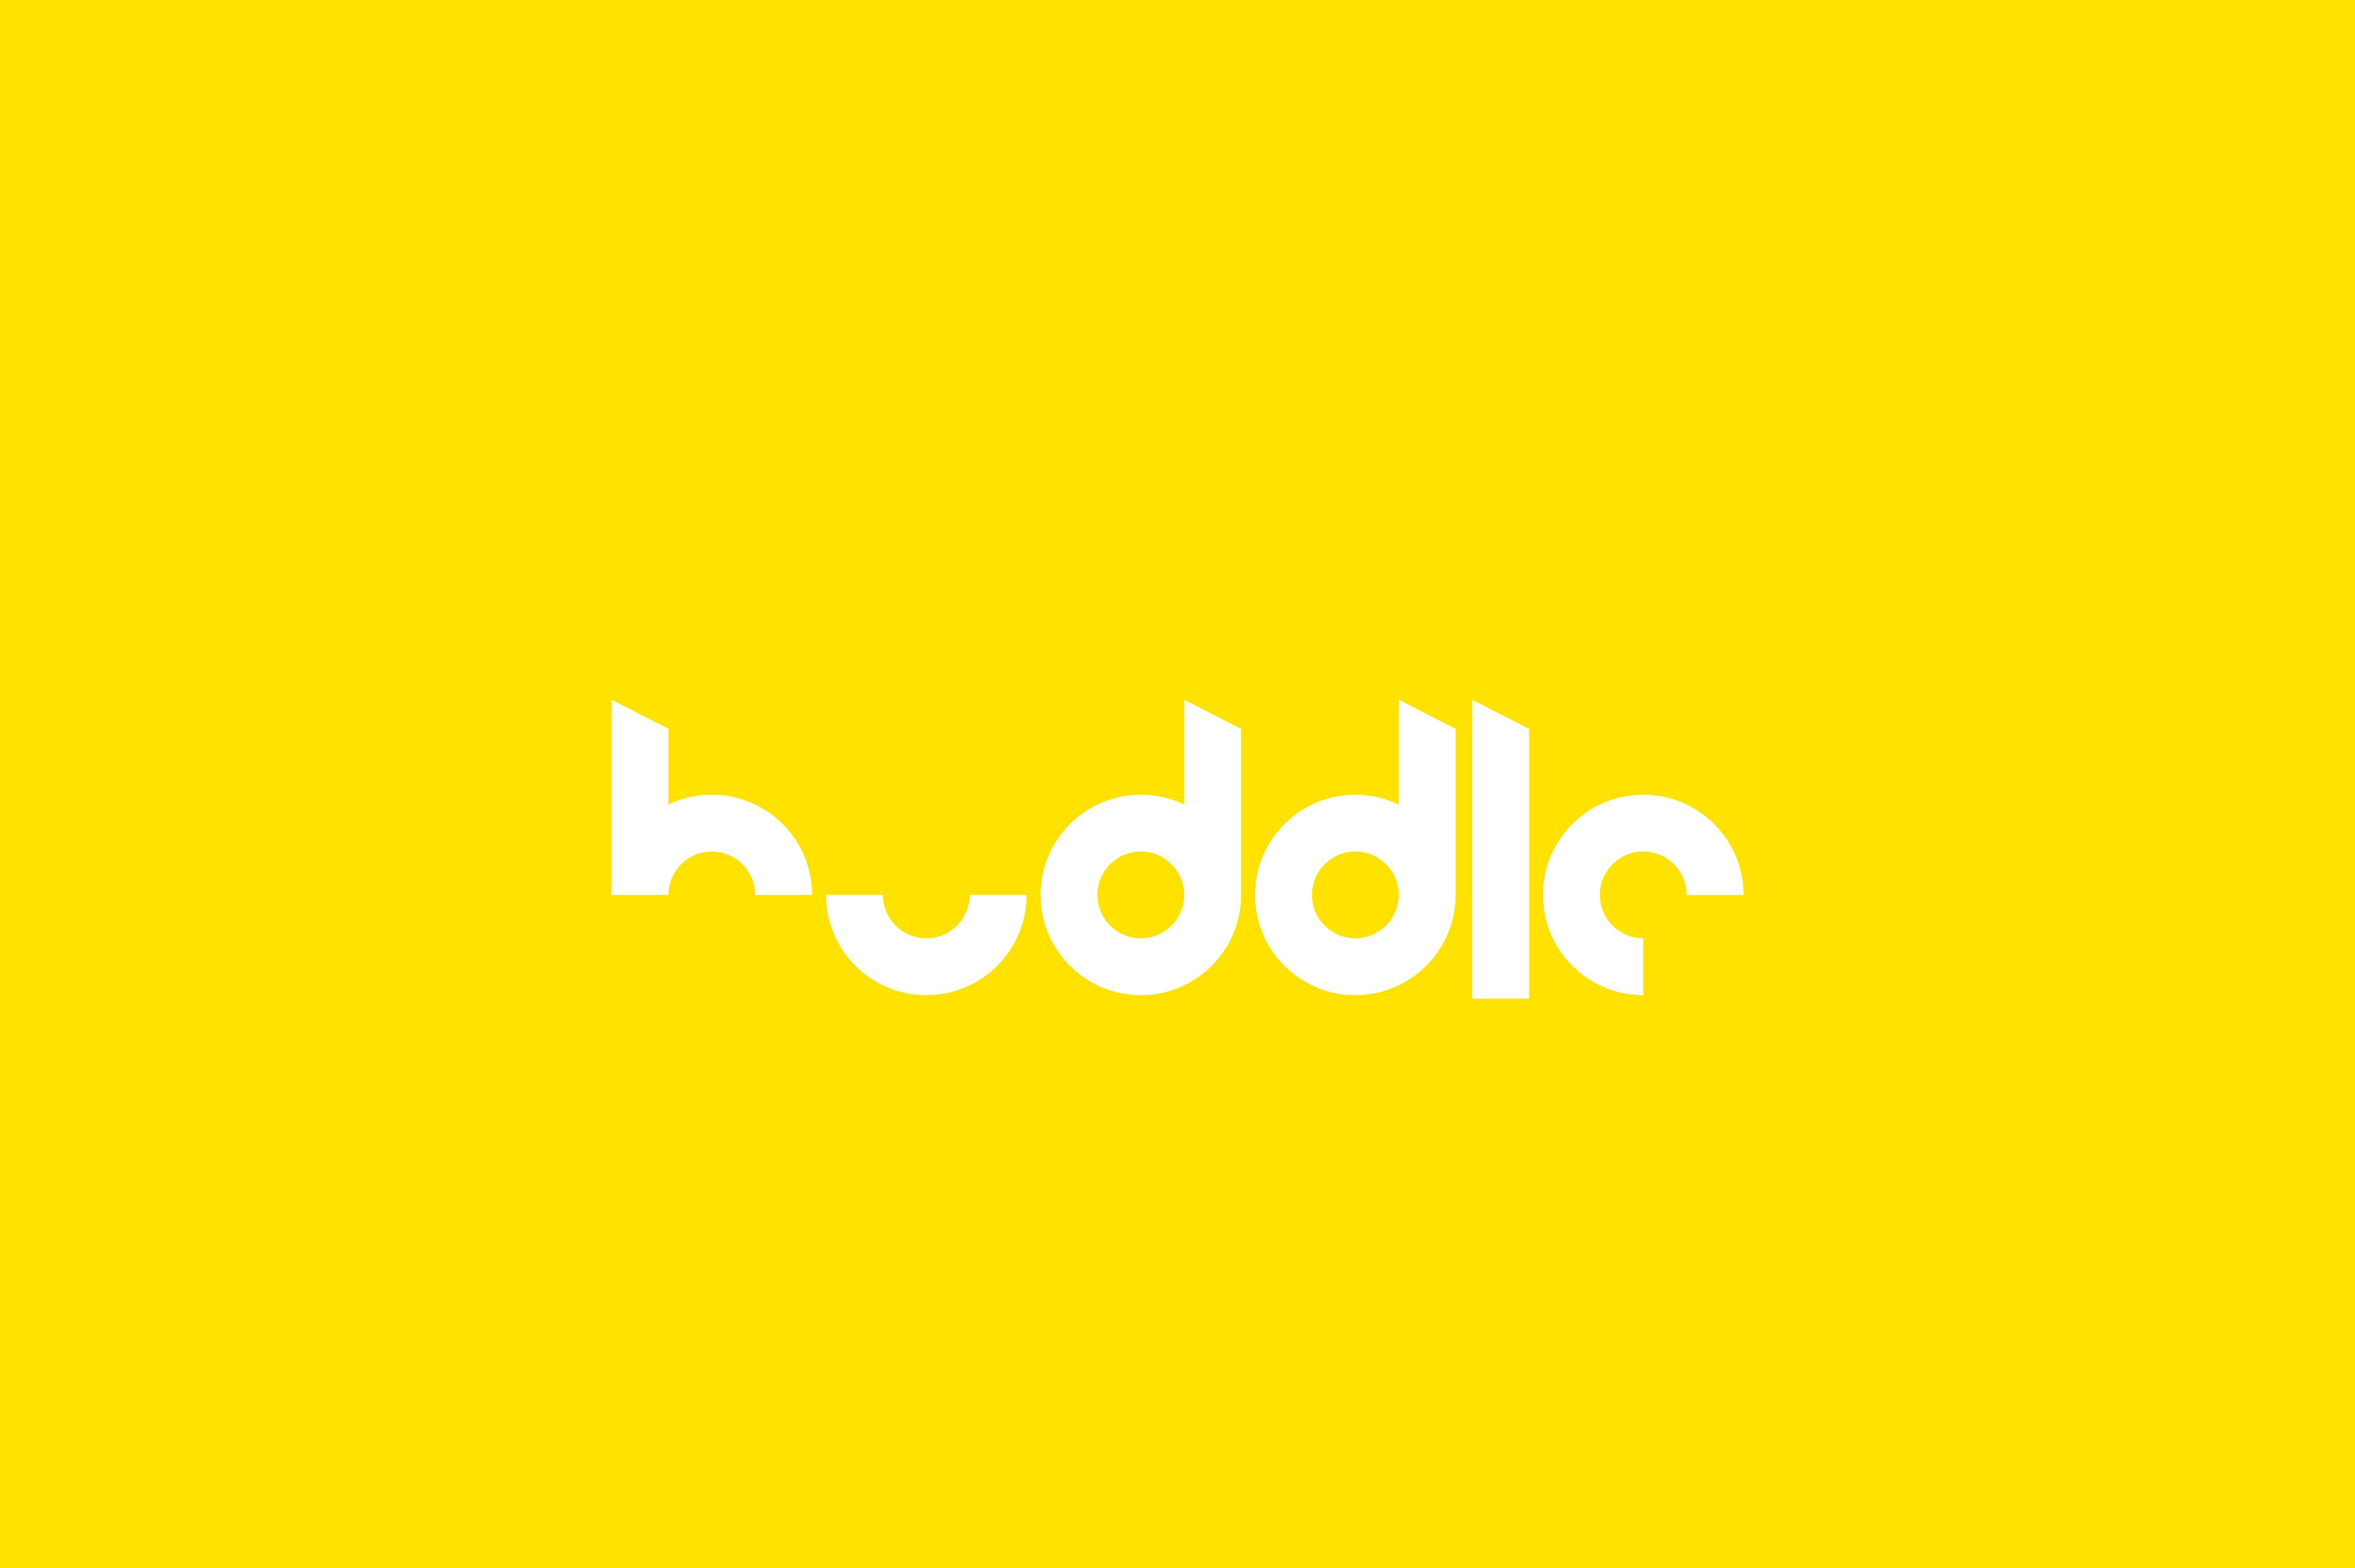 Huddle Logo - Huddle - Logo Design for Collaborative Workspace | Logos | Logos ...